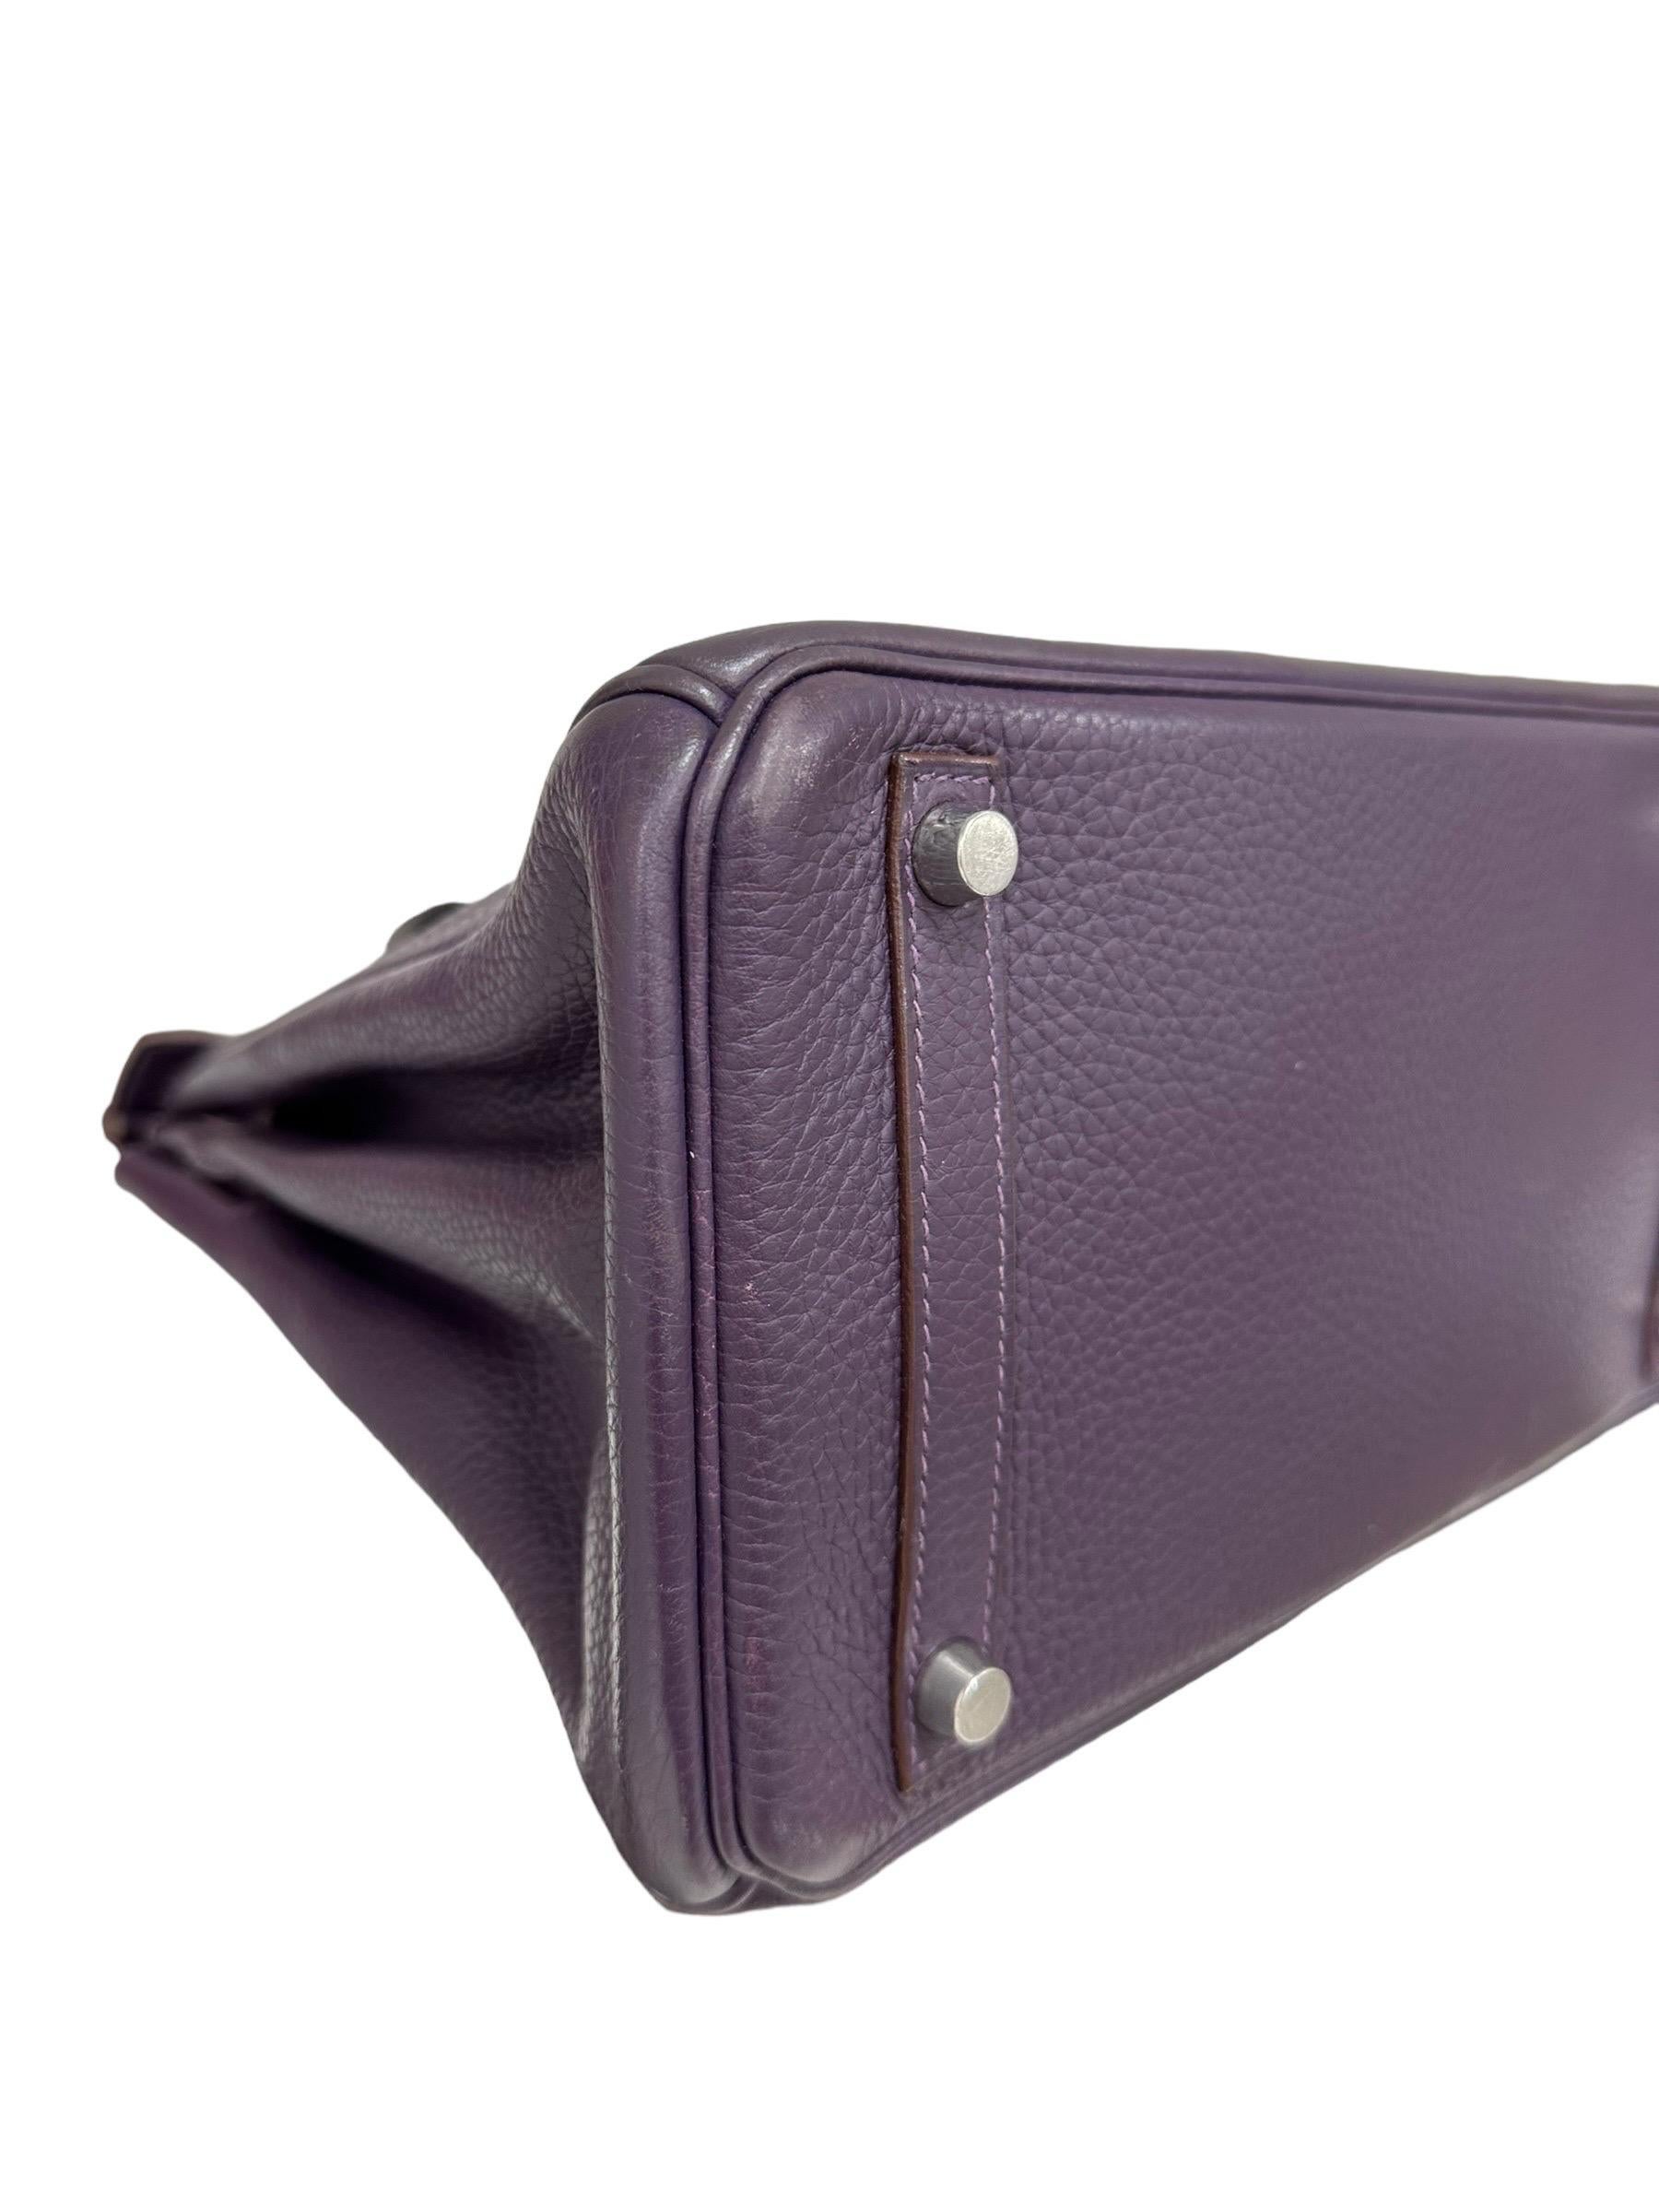 2007 Hermès Birkin 30 Clemence Leather Violet Raisin Top Handle Bag For Sale 8